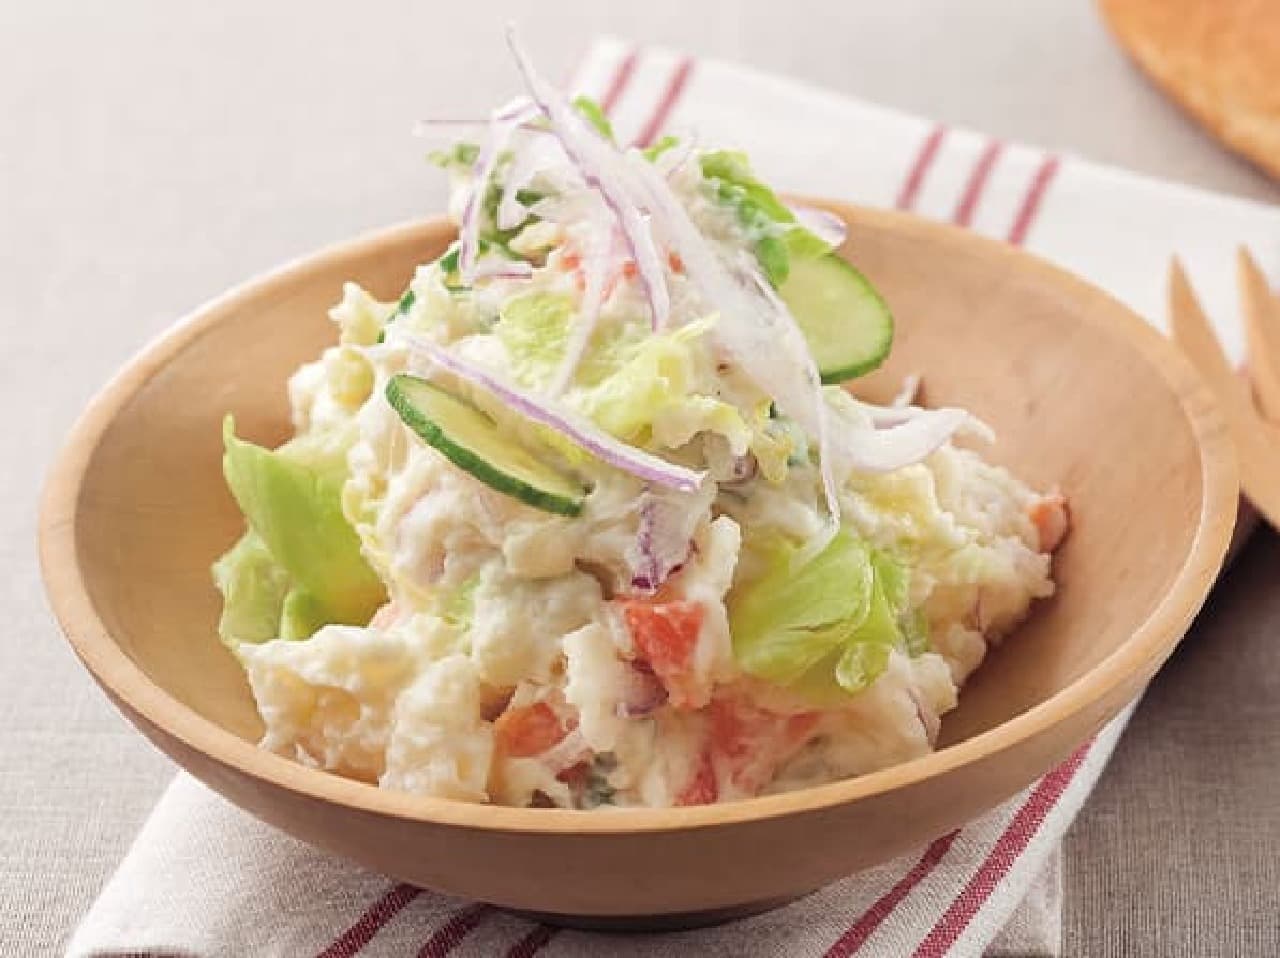 FLO "Potato Salad